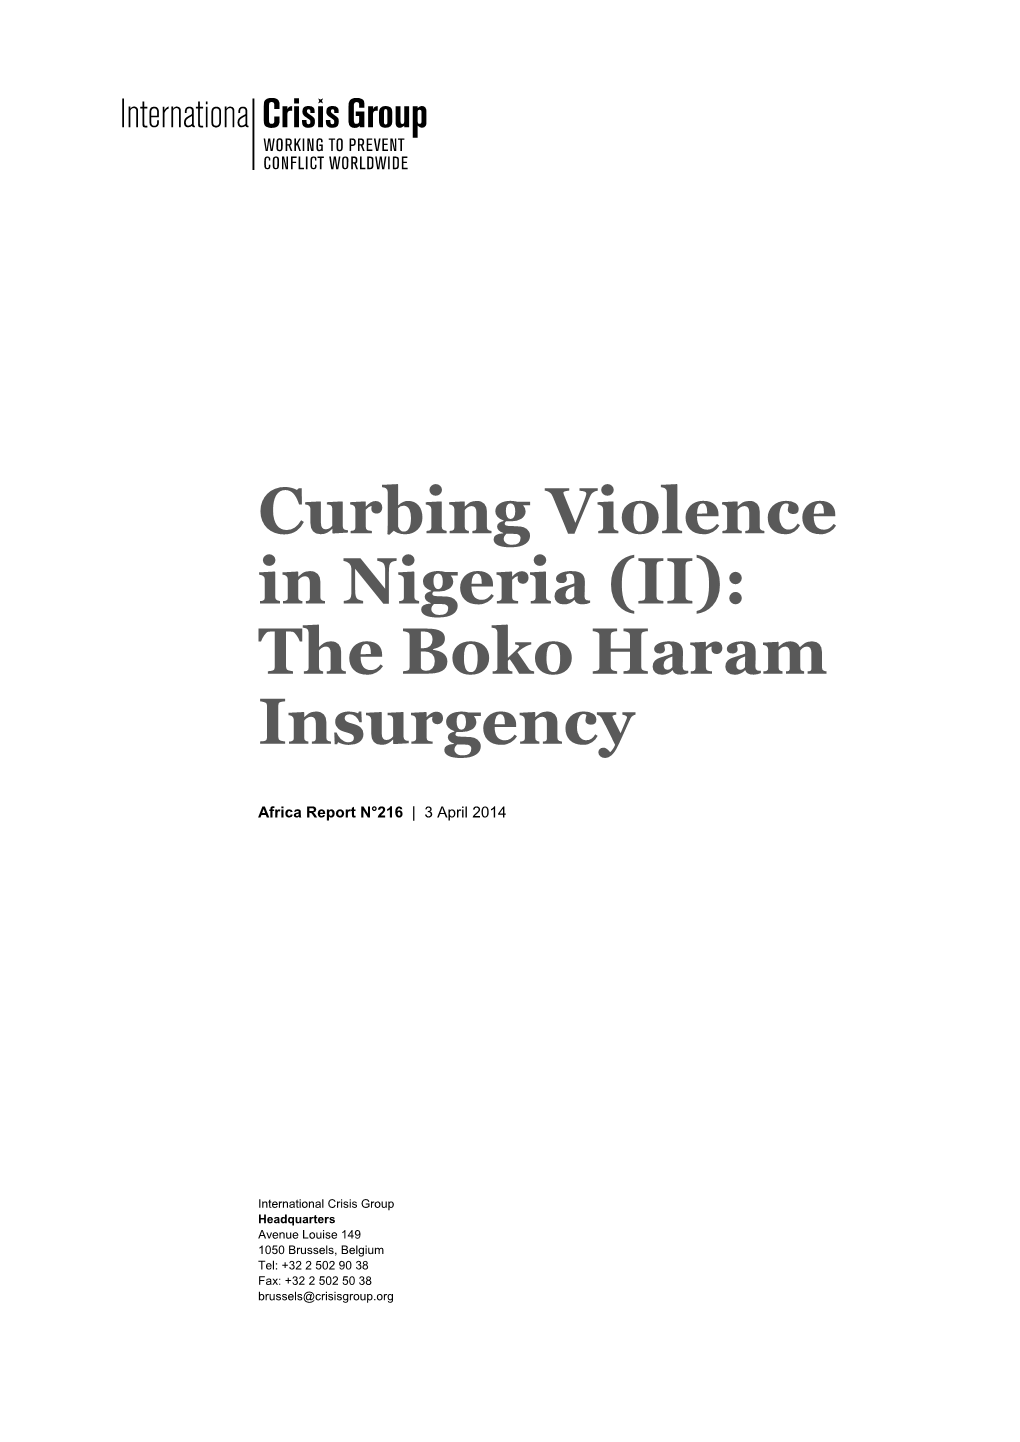 Curbing Violence in Nigeria (II): the Boko Haram Insurgency